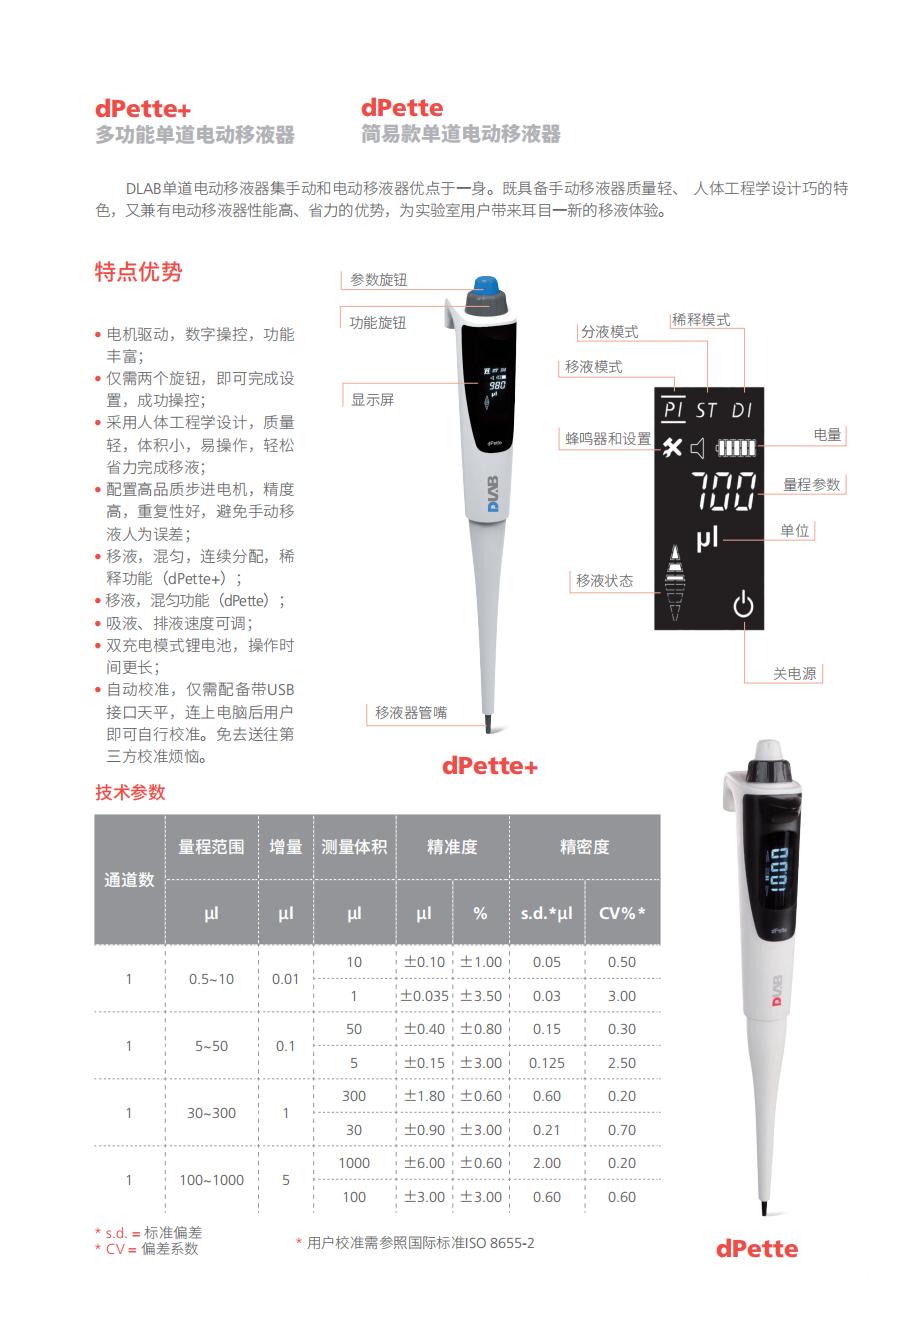 dPette简易款电动移液器,量程:30-300μl ,7016301003,大龙